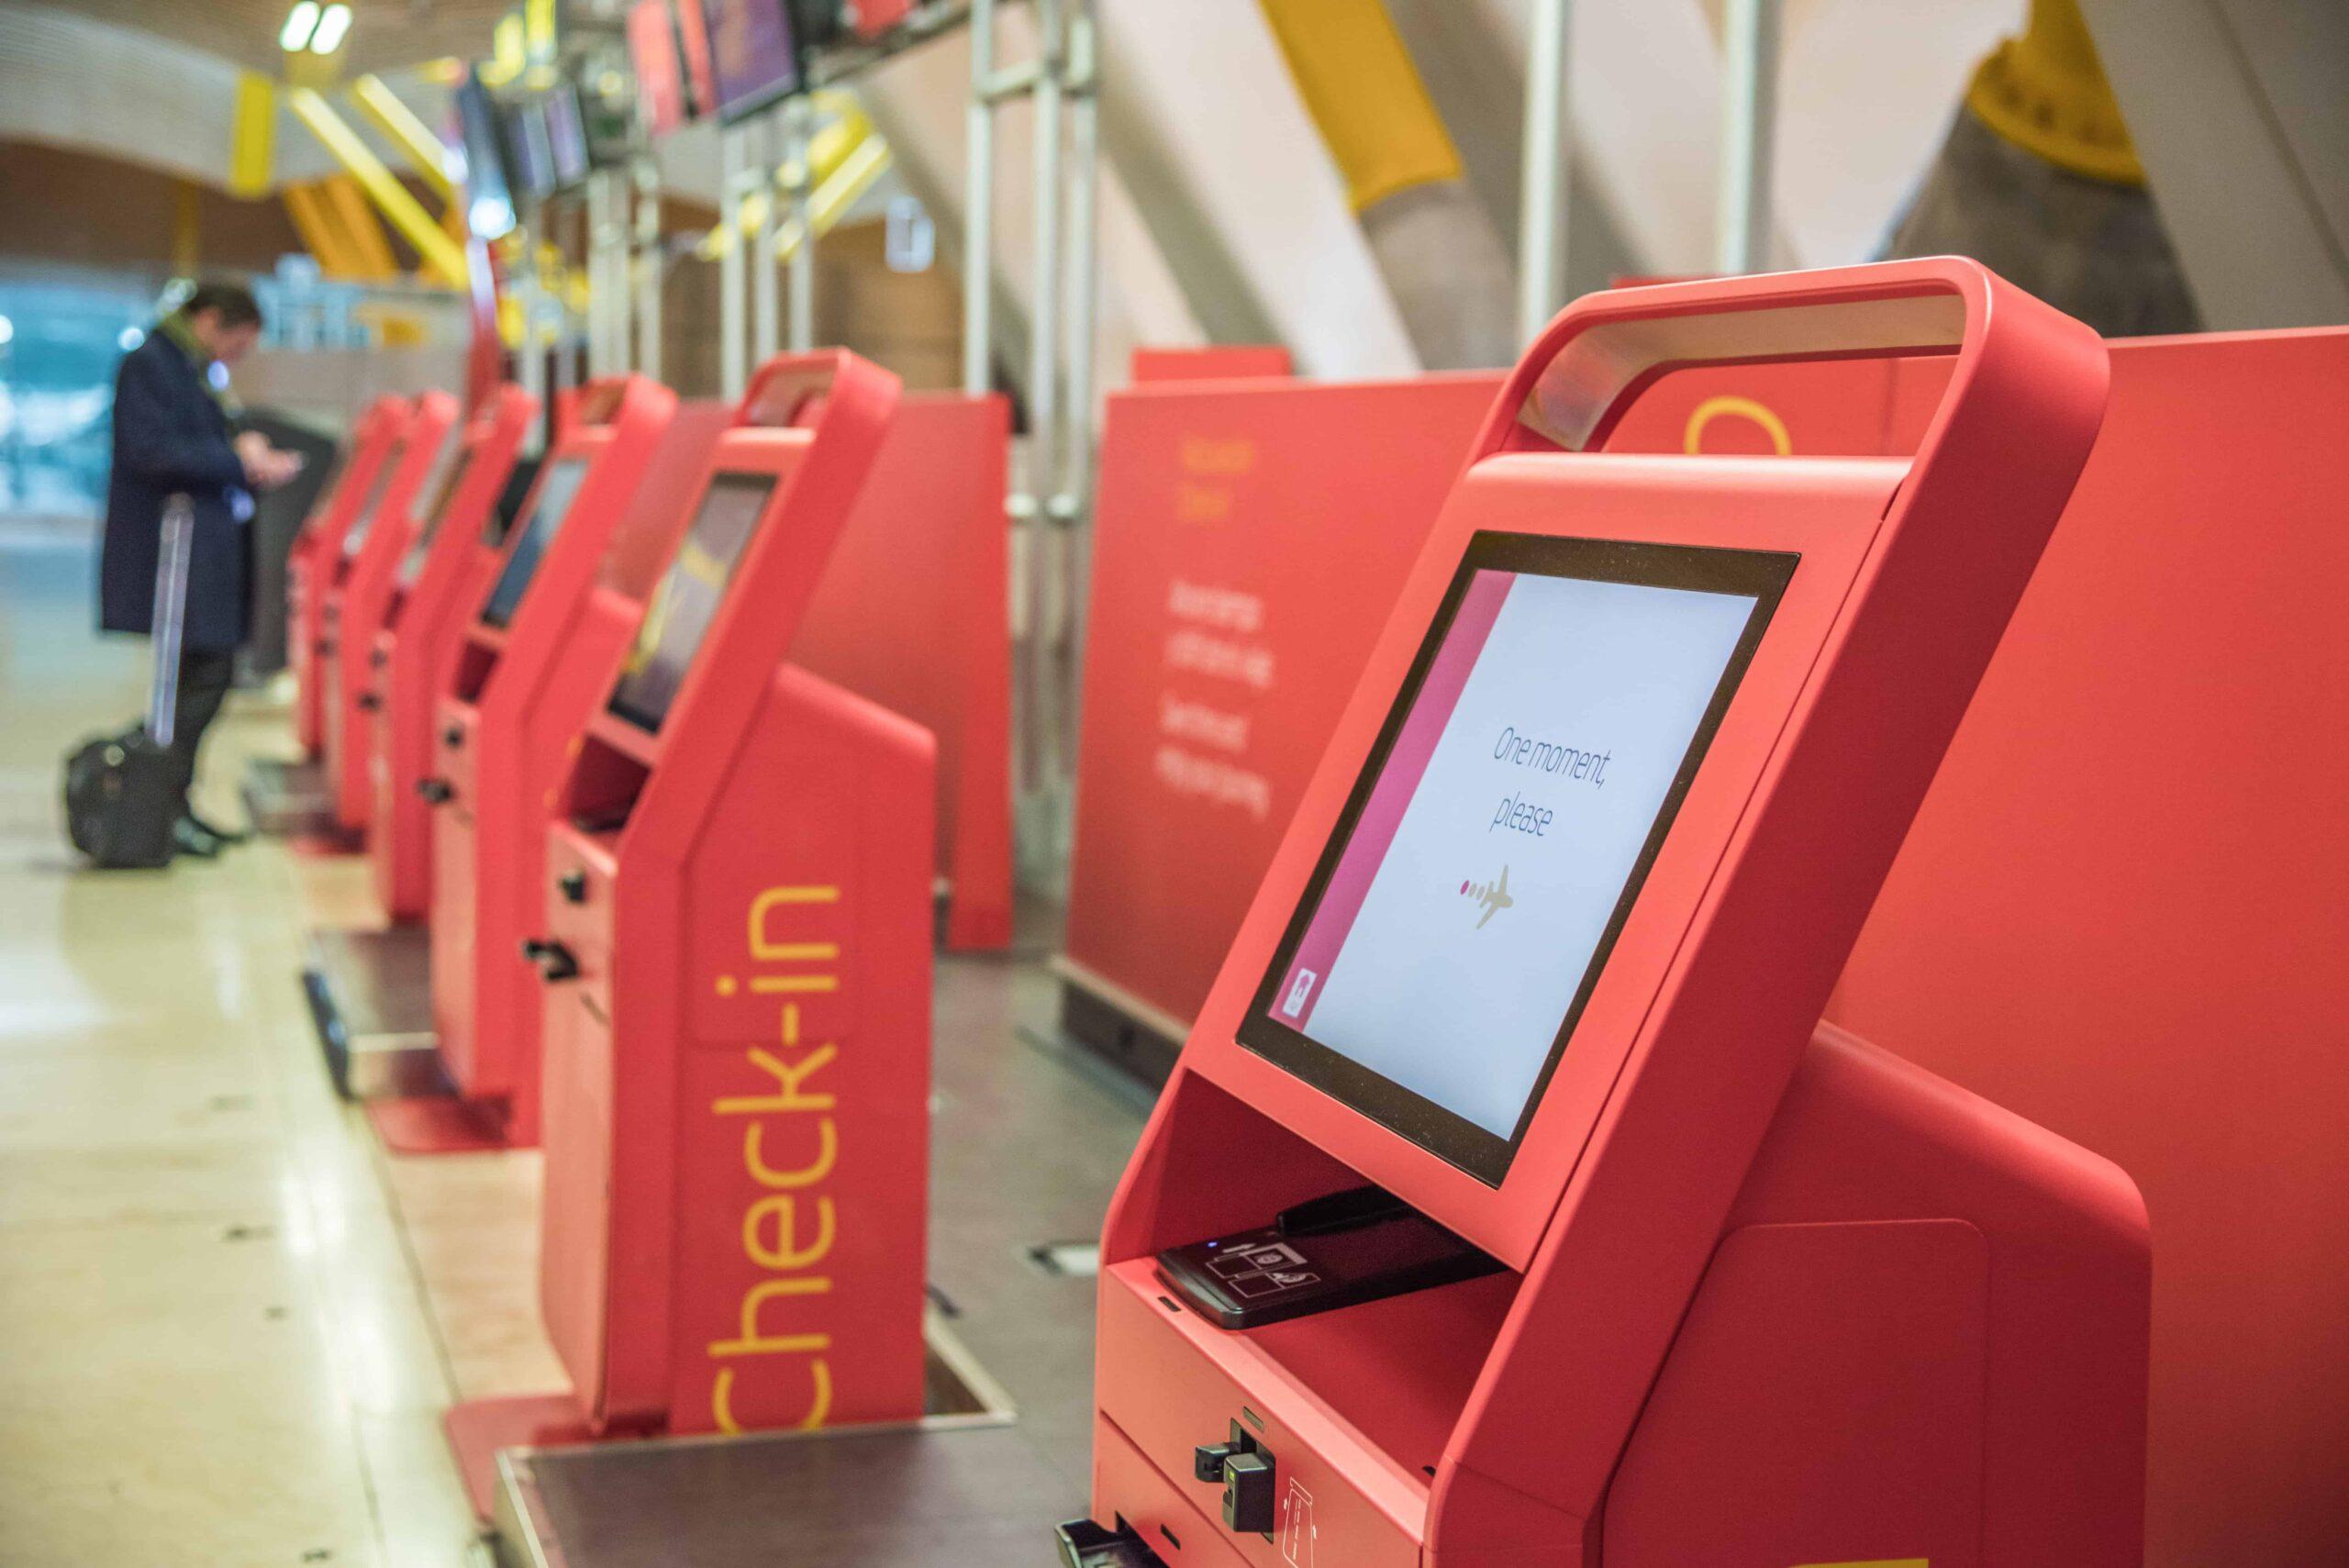 red-self-machines-checkin-service-airport-kiosk-min